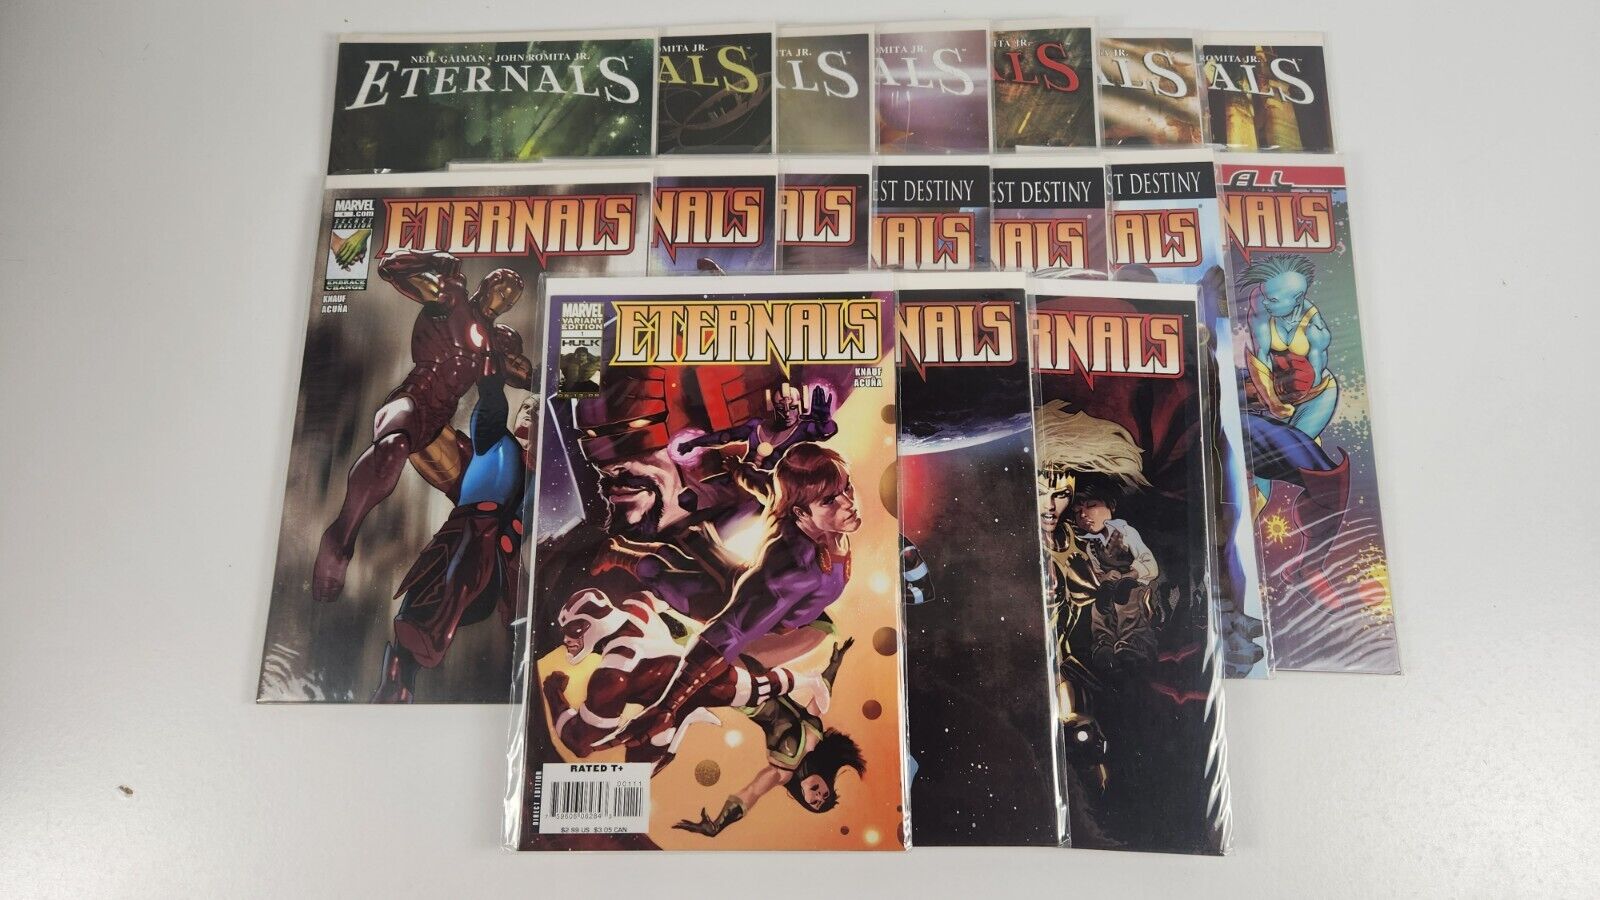 Eternals Vol 3 (Marvel 2006) #1-7 & Eternals Vol 4 (Marvel 2008) #1-9, Annual #1